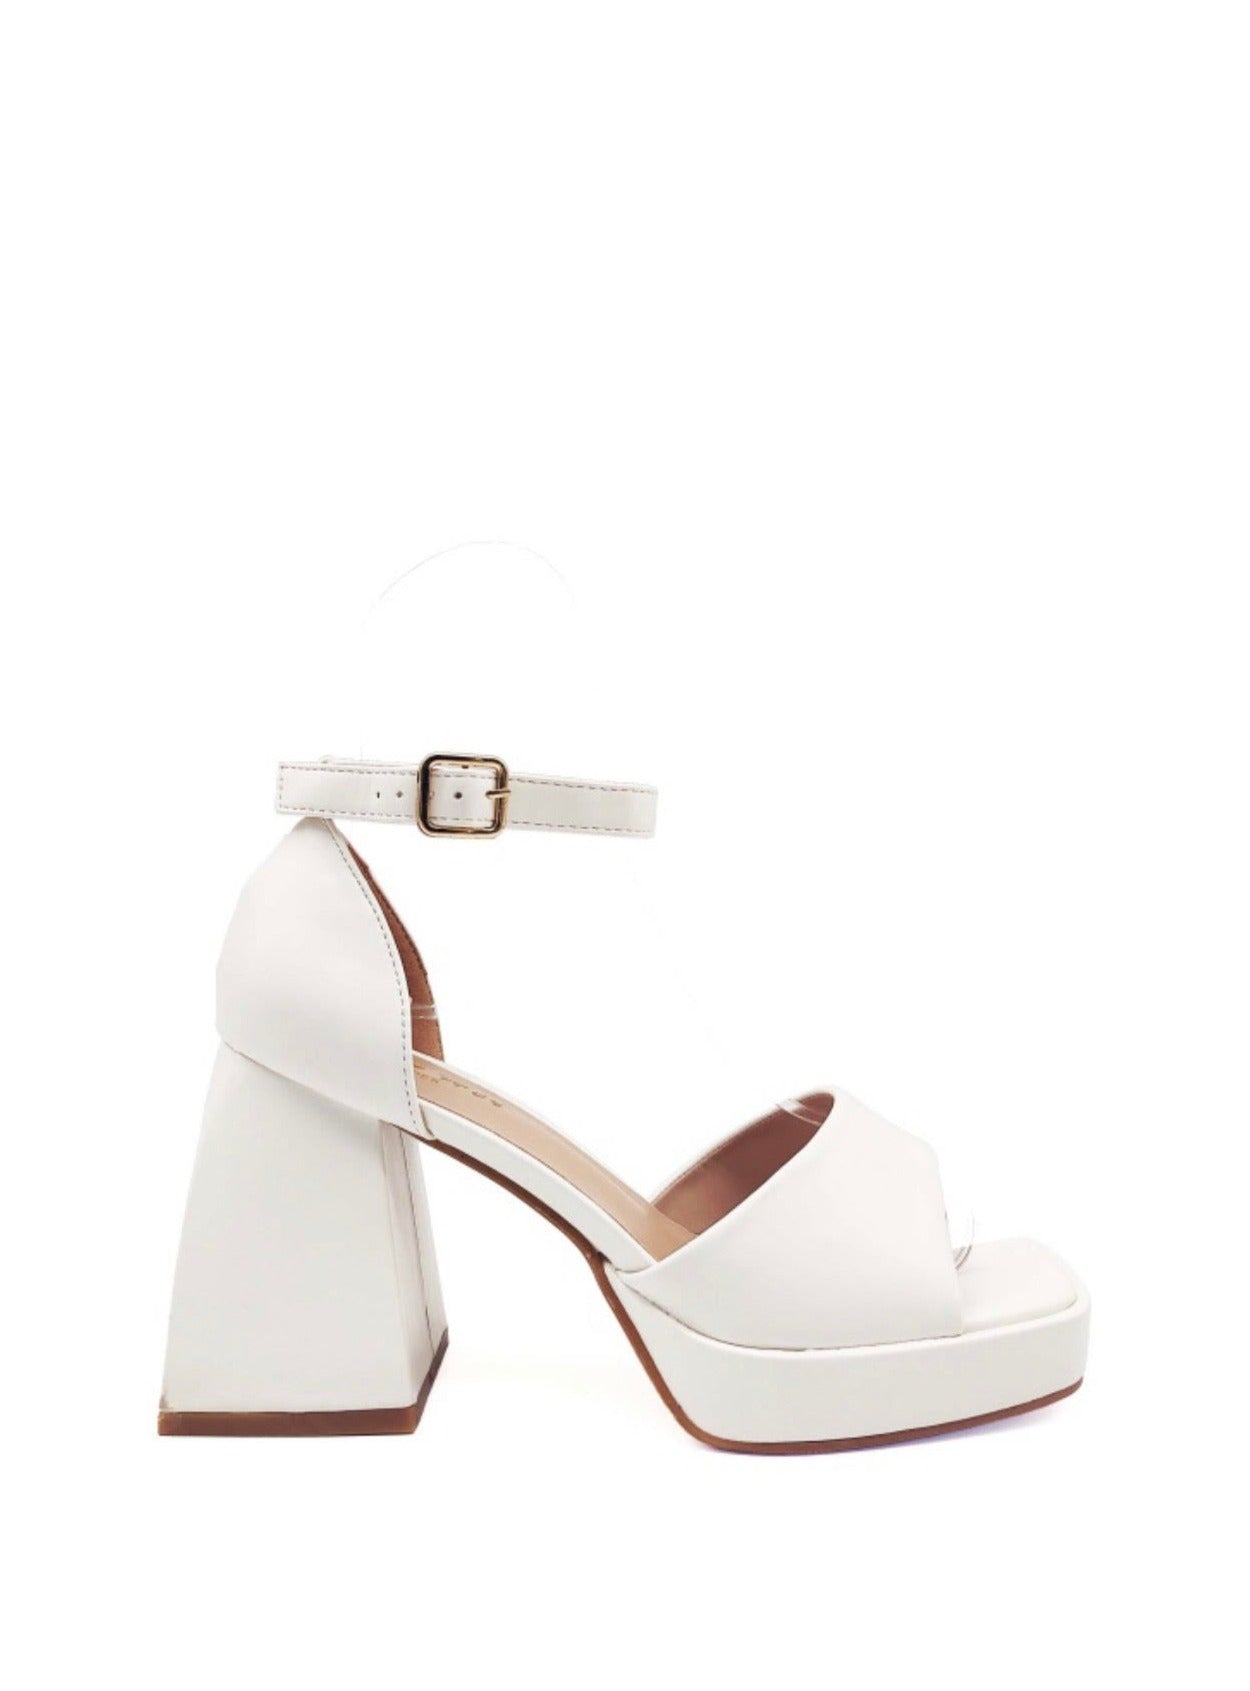 Guess Women's Rippa Textured Platform Sandals High Block Heels White 6.5 |  eBay